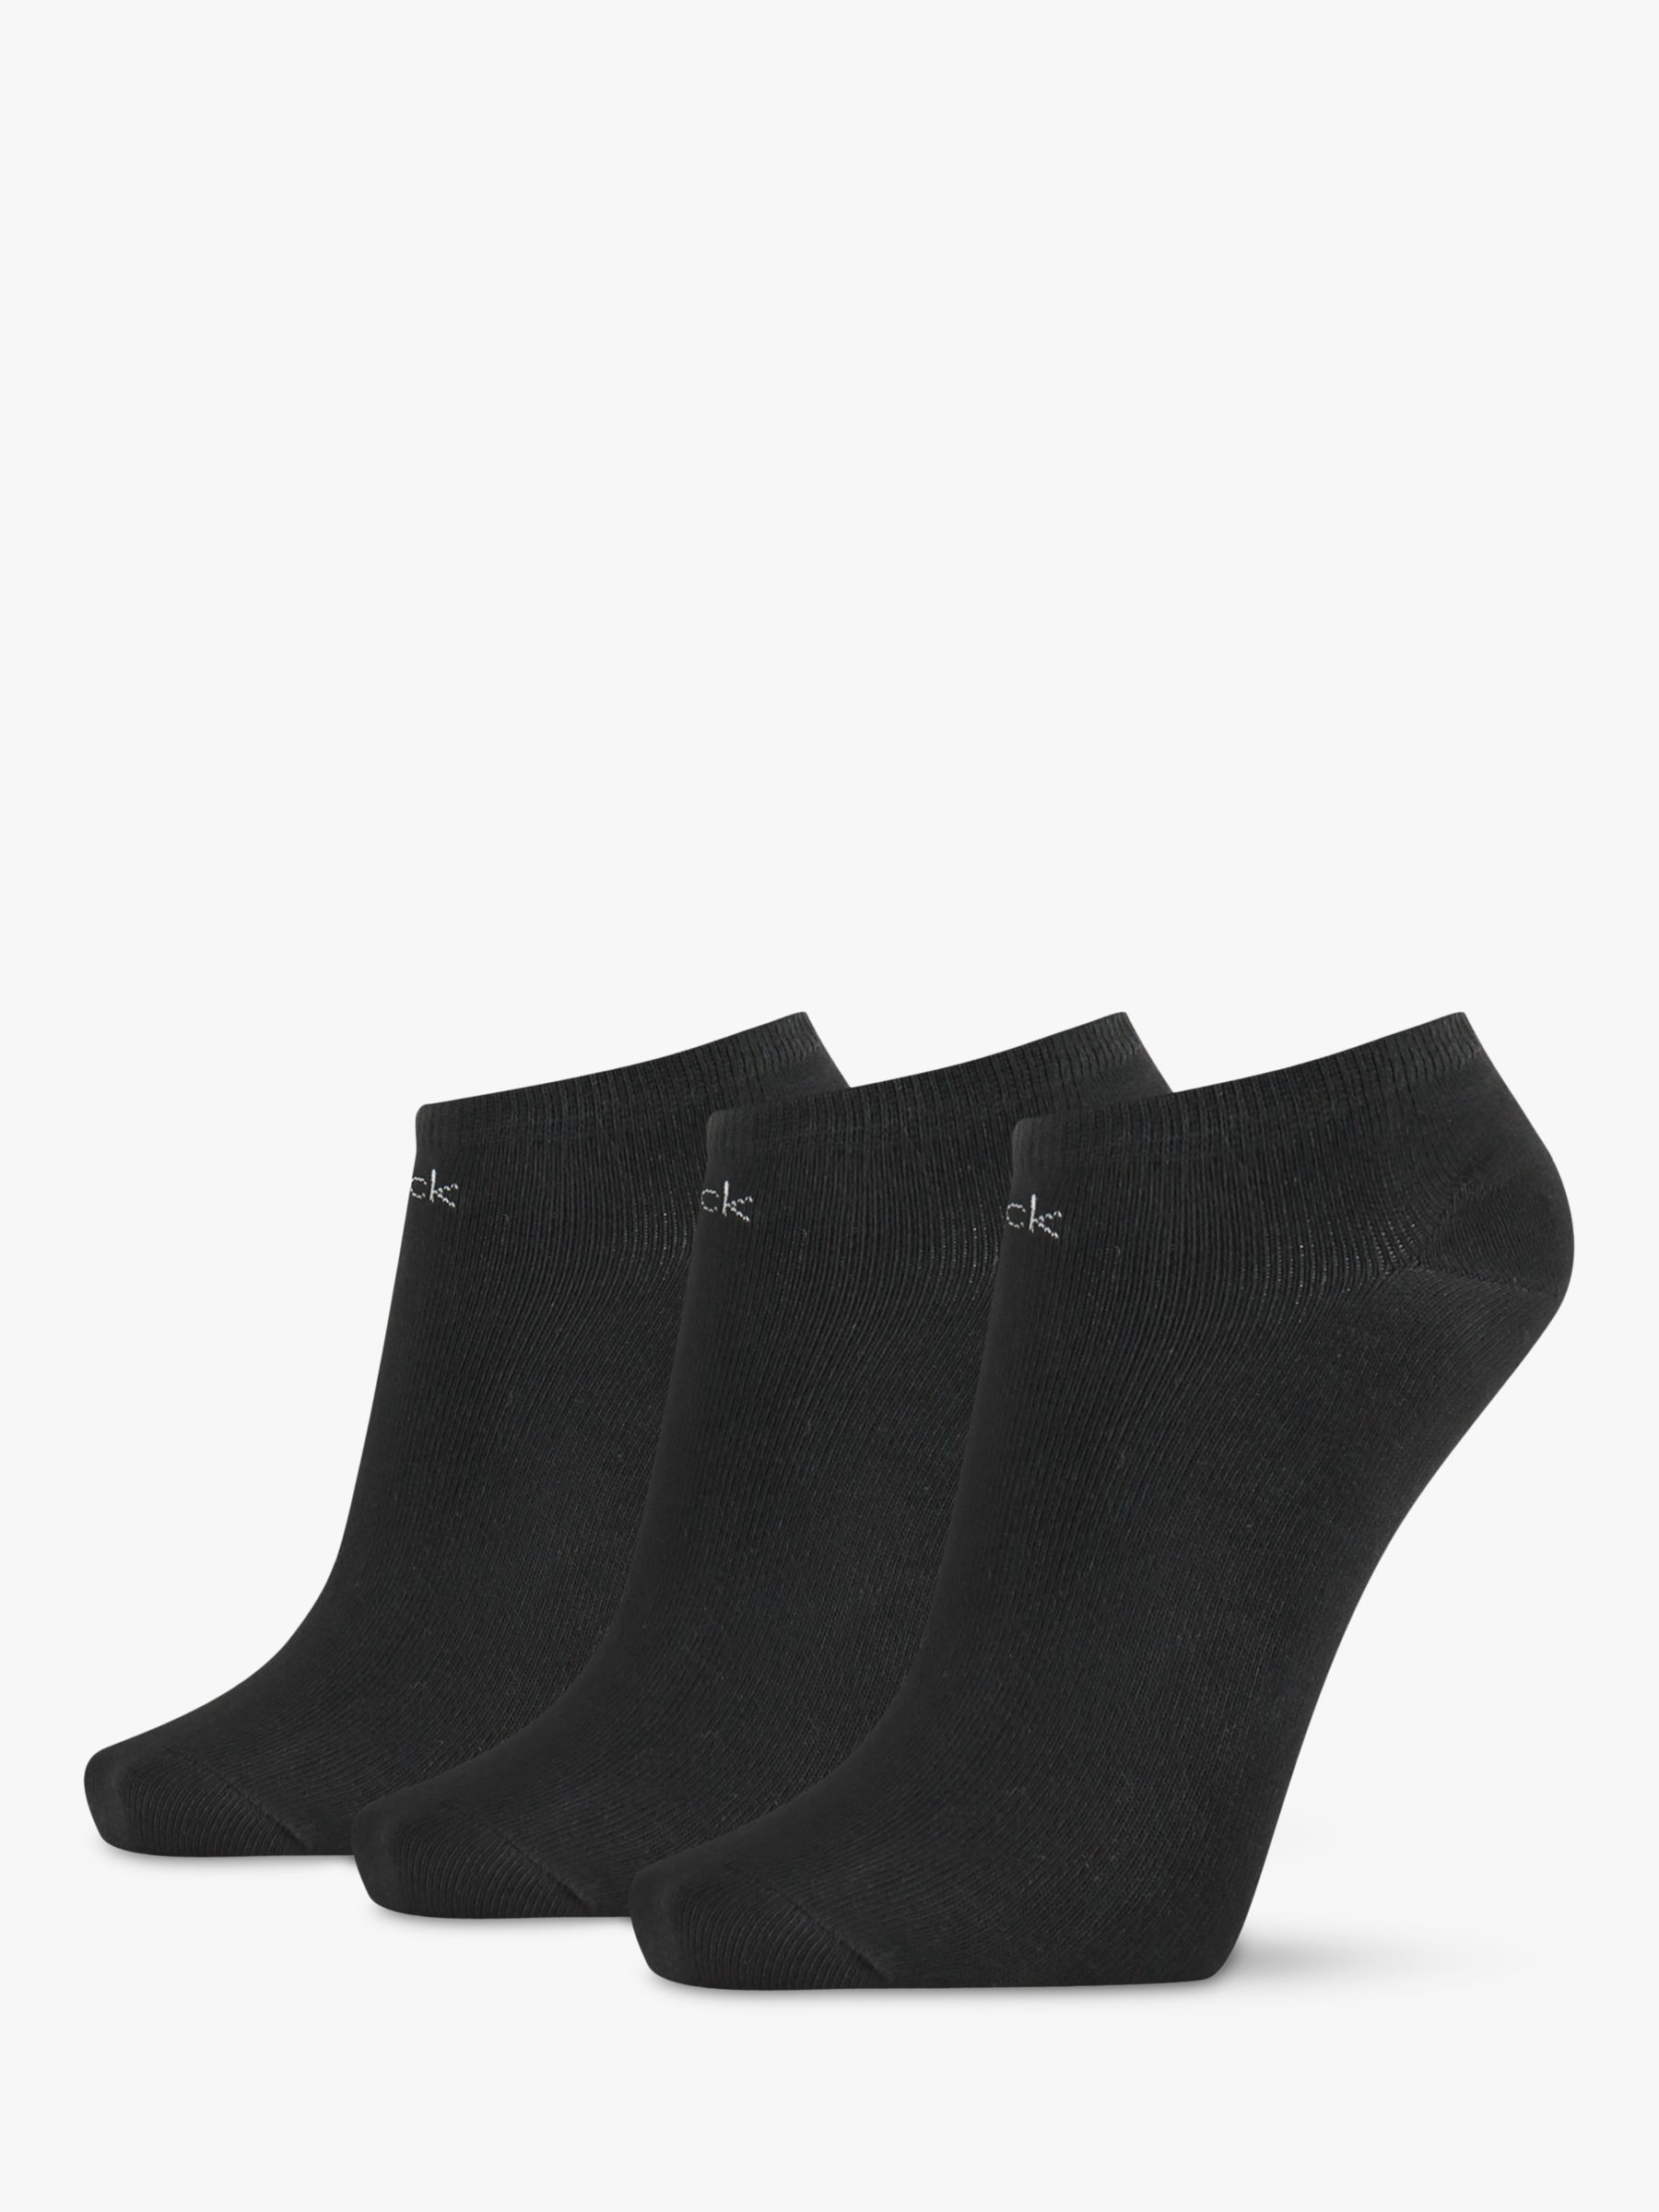 Calvin Klein Chloe Liner Socks, Pack of 3, Black at John Lewis & Partners